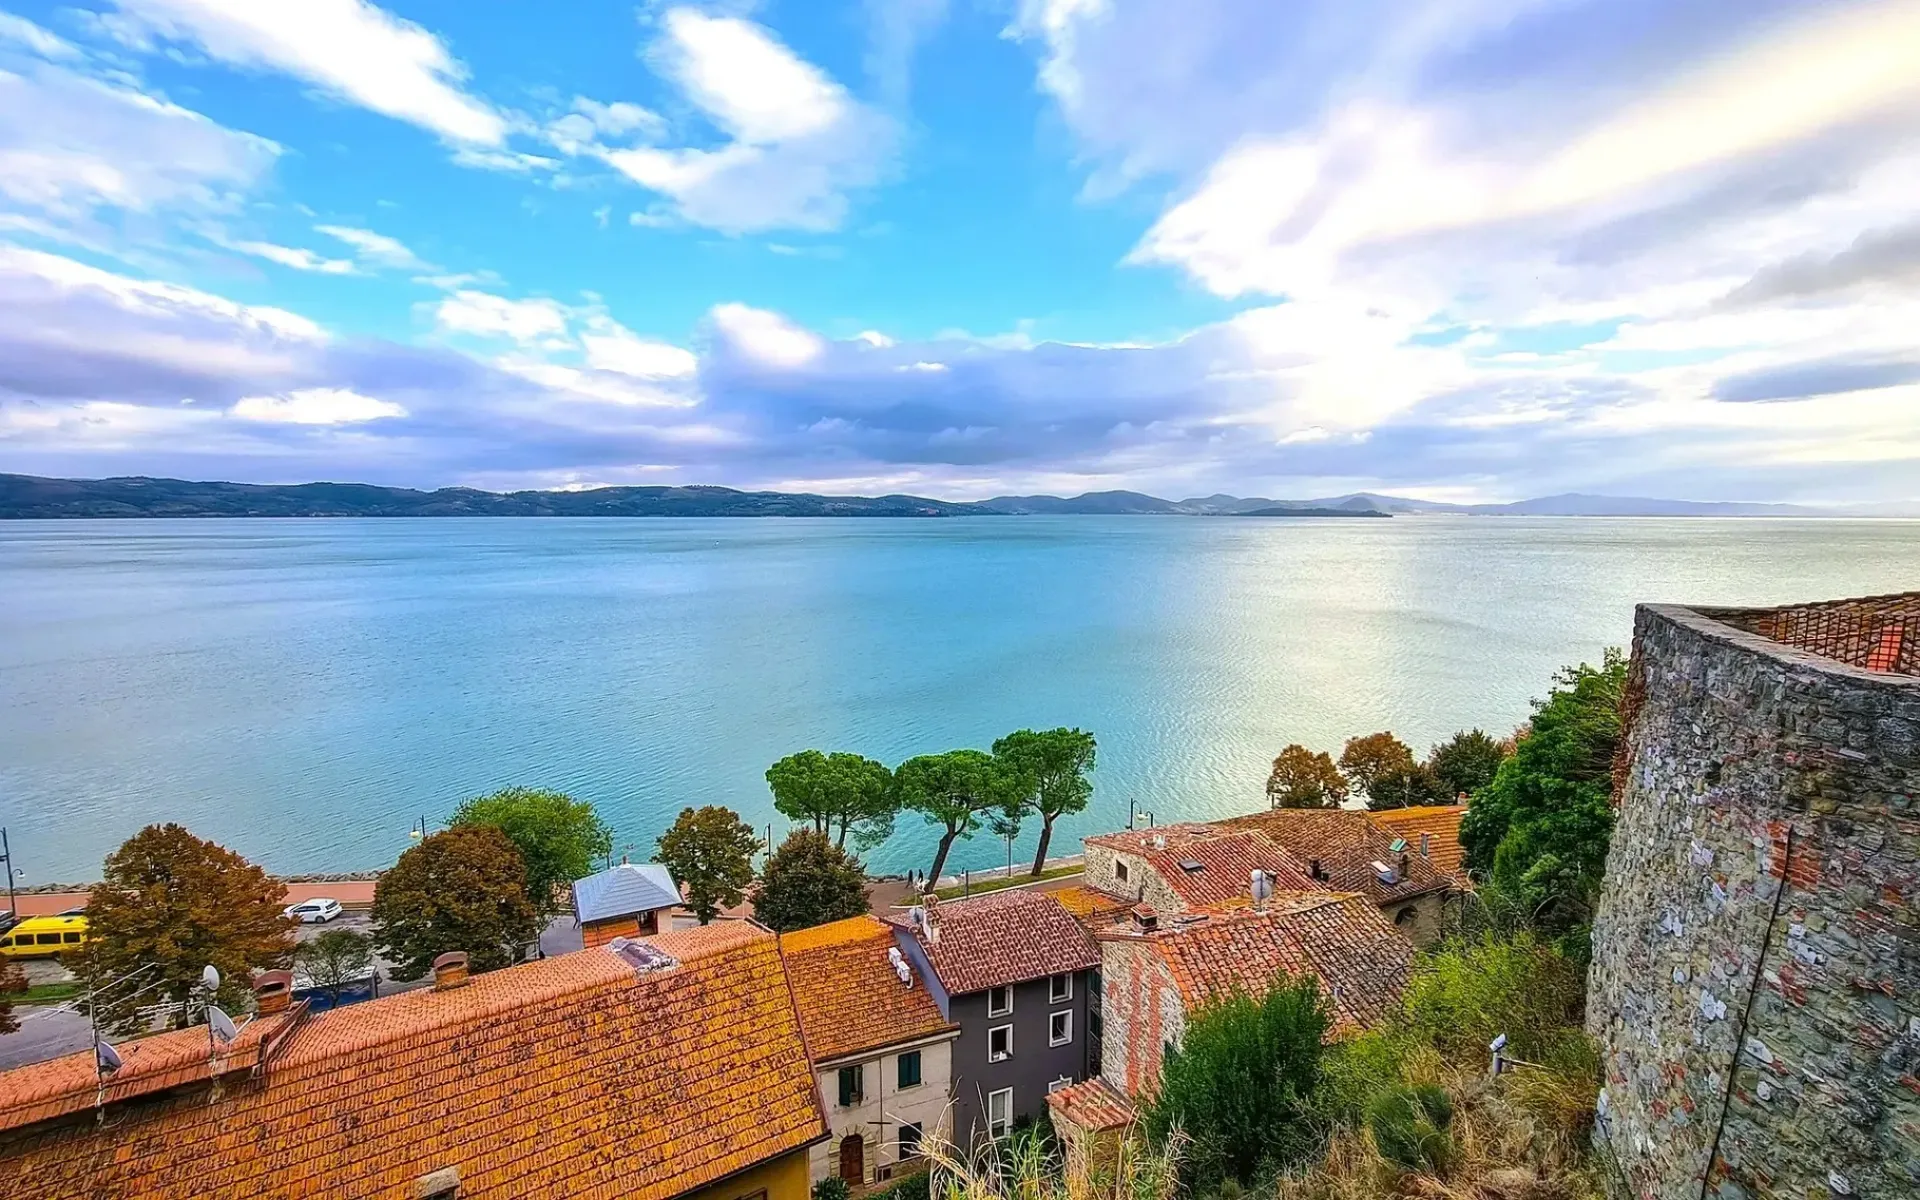 Discover Lake Trasimeno in Umbria